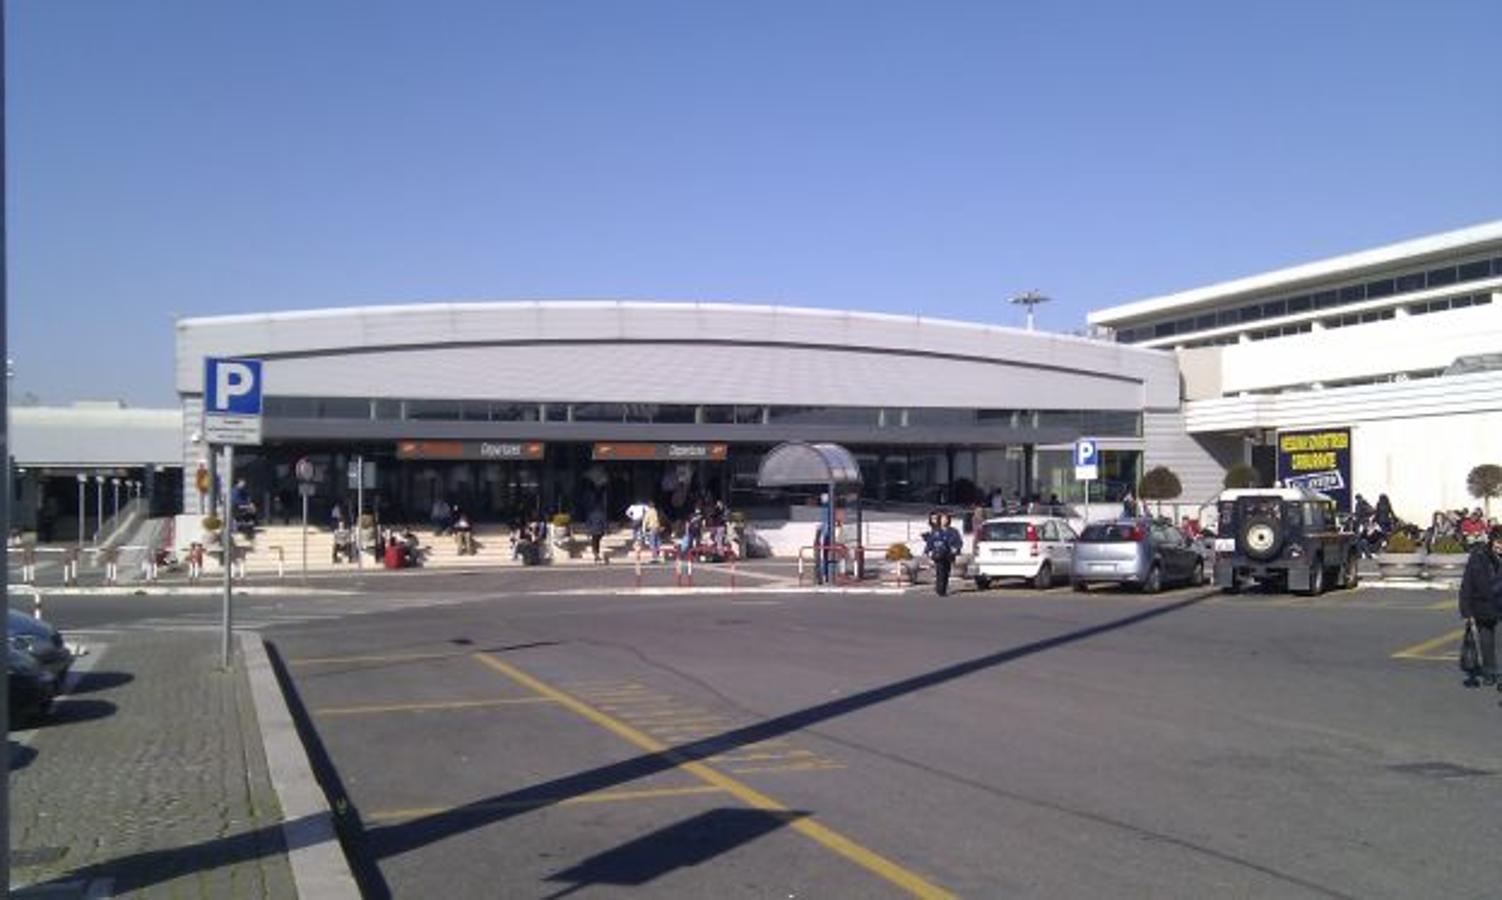 Aeropuerto de Ciampino (Roma).Otro apeadero 'low cost'.